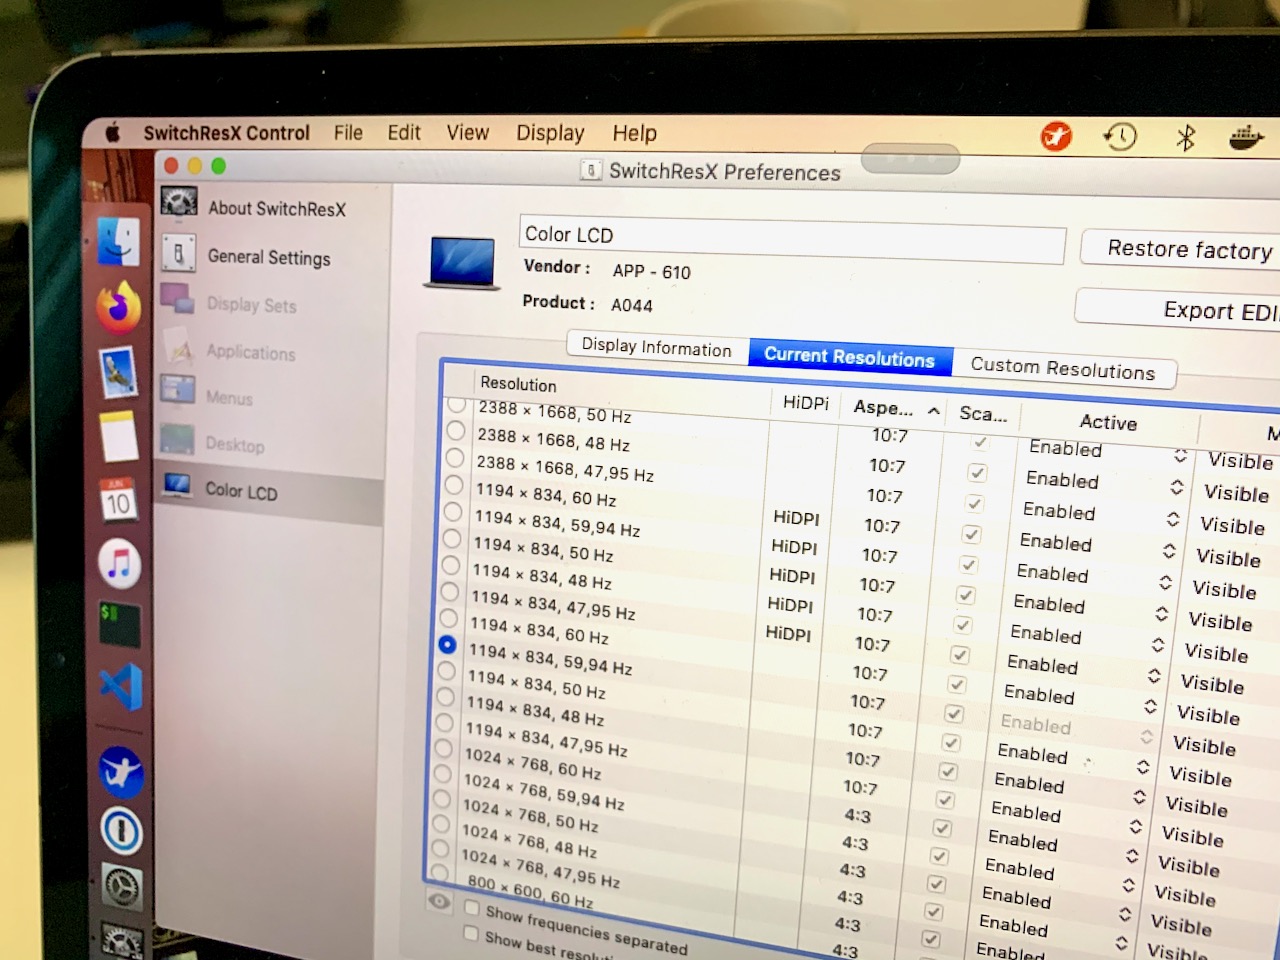 jump desktop to make ipad into laptop